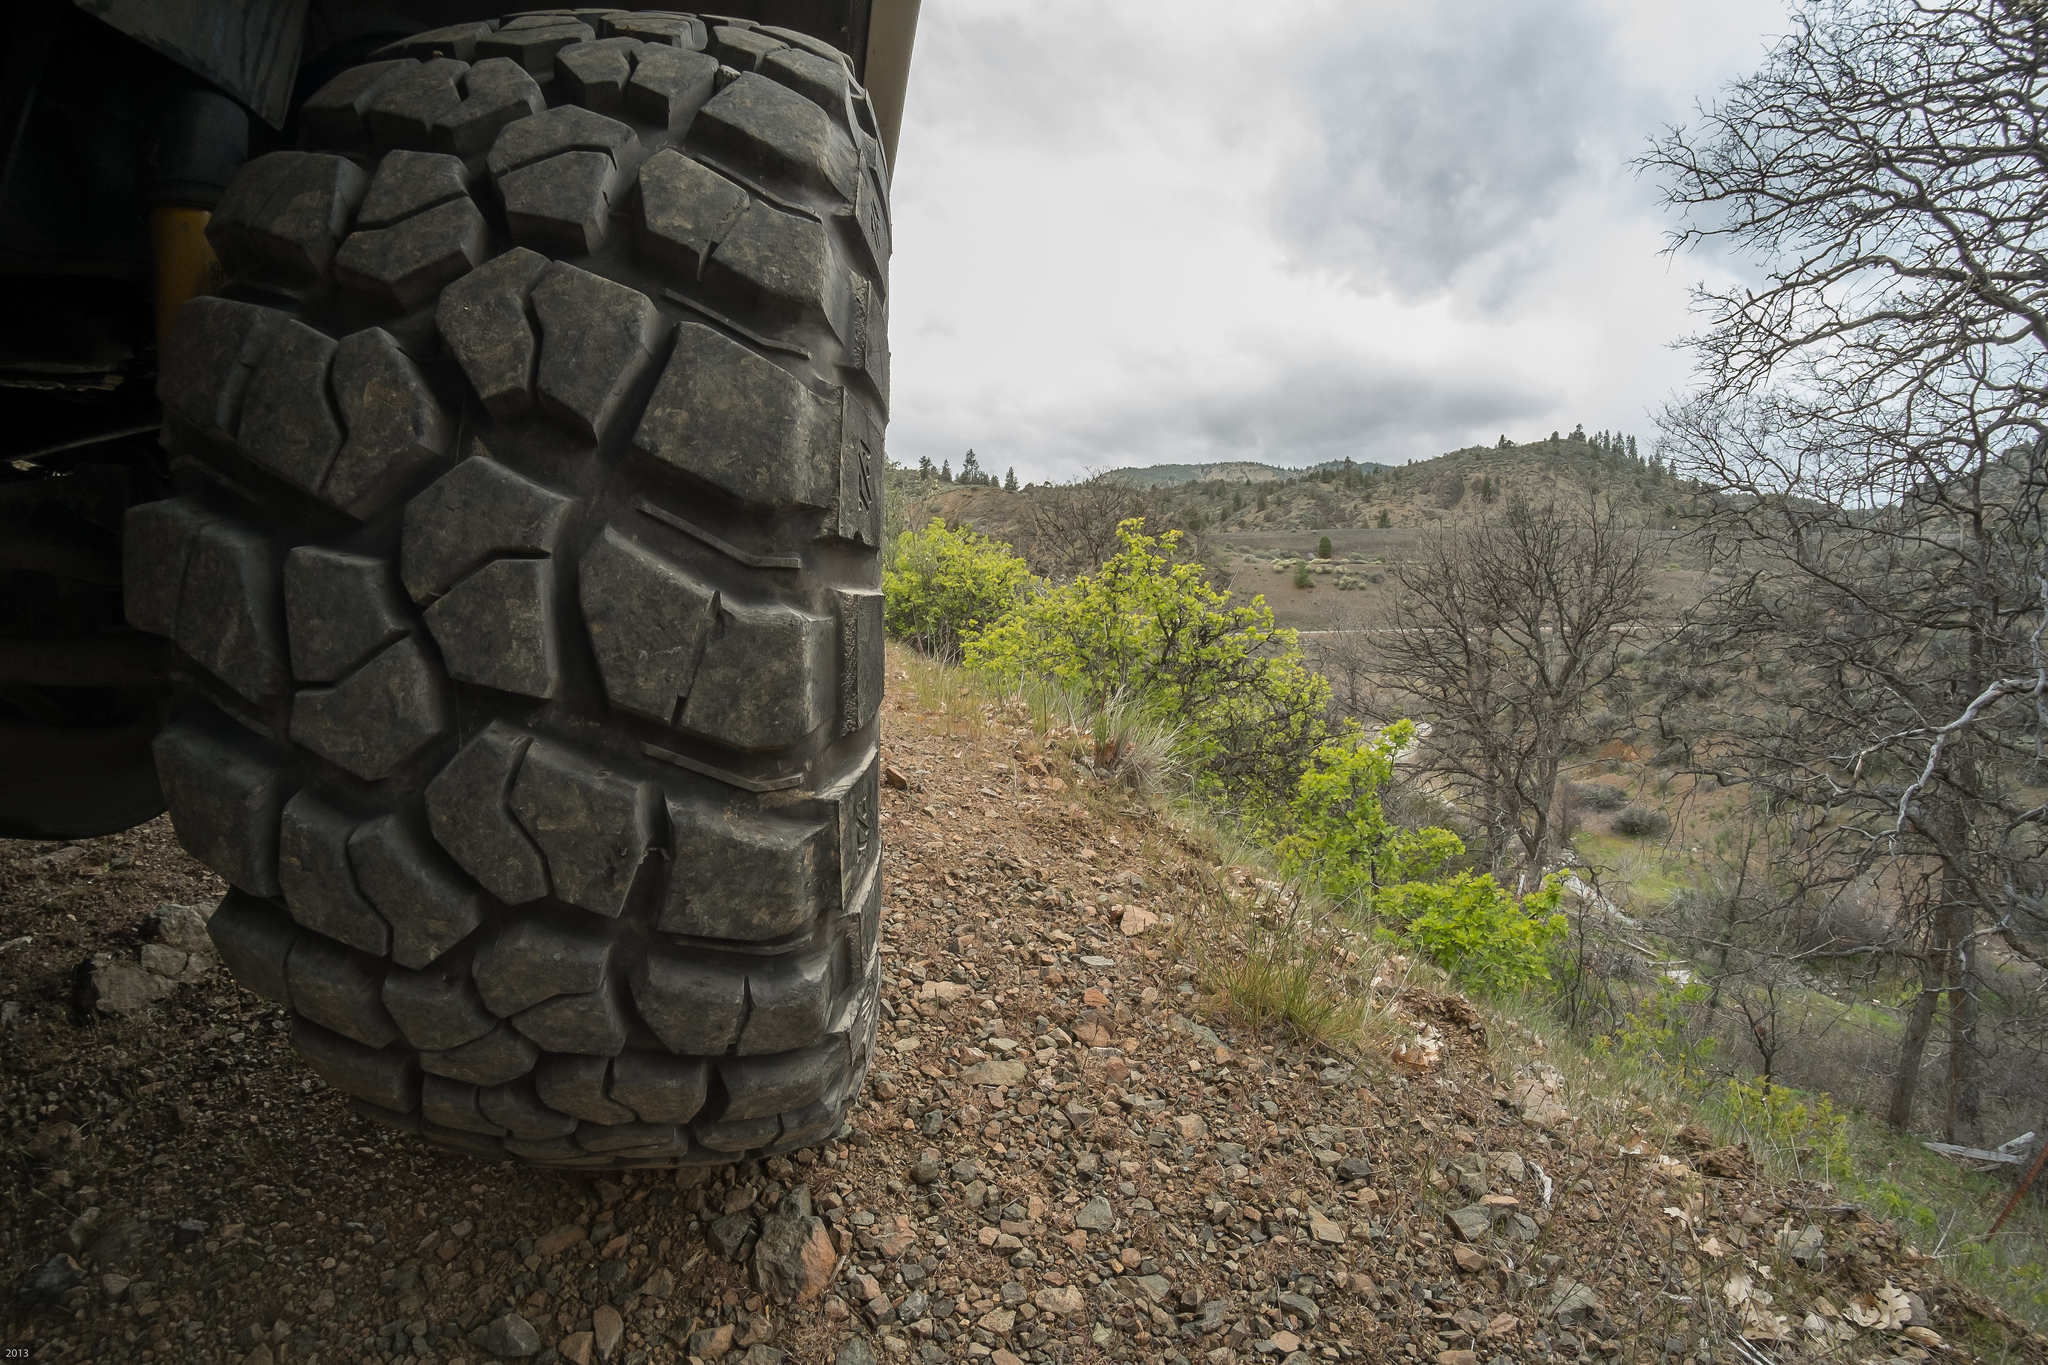 Review - BF Goodrich Mud Terrain Tires - Adventure Ready.